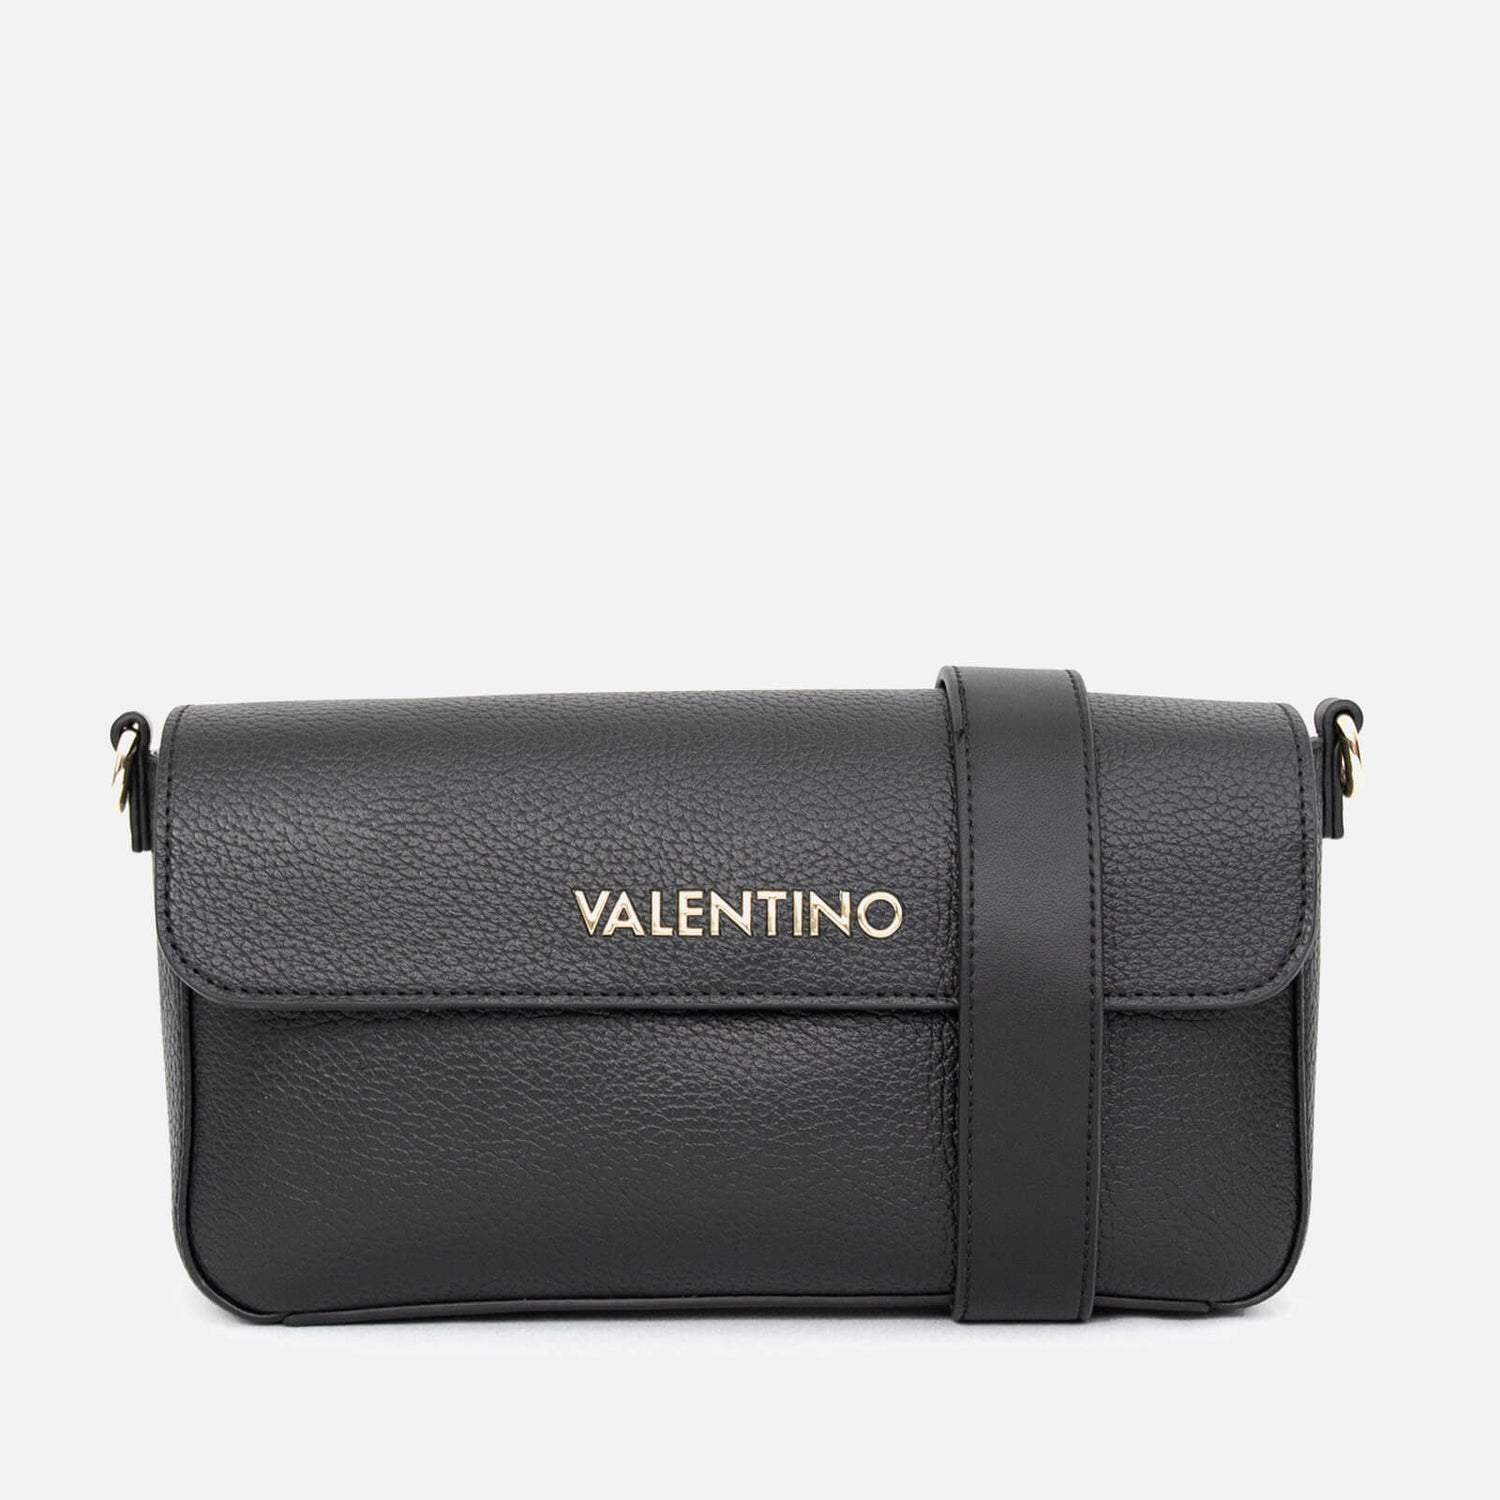 Valentino Alexia Faux Leather Cross Body Bag | TheHut.com